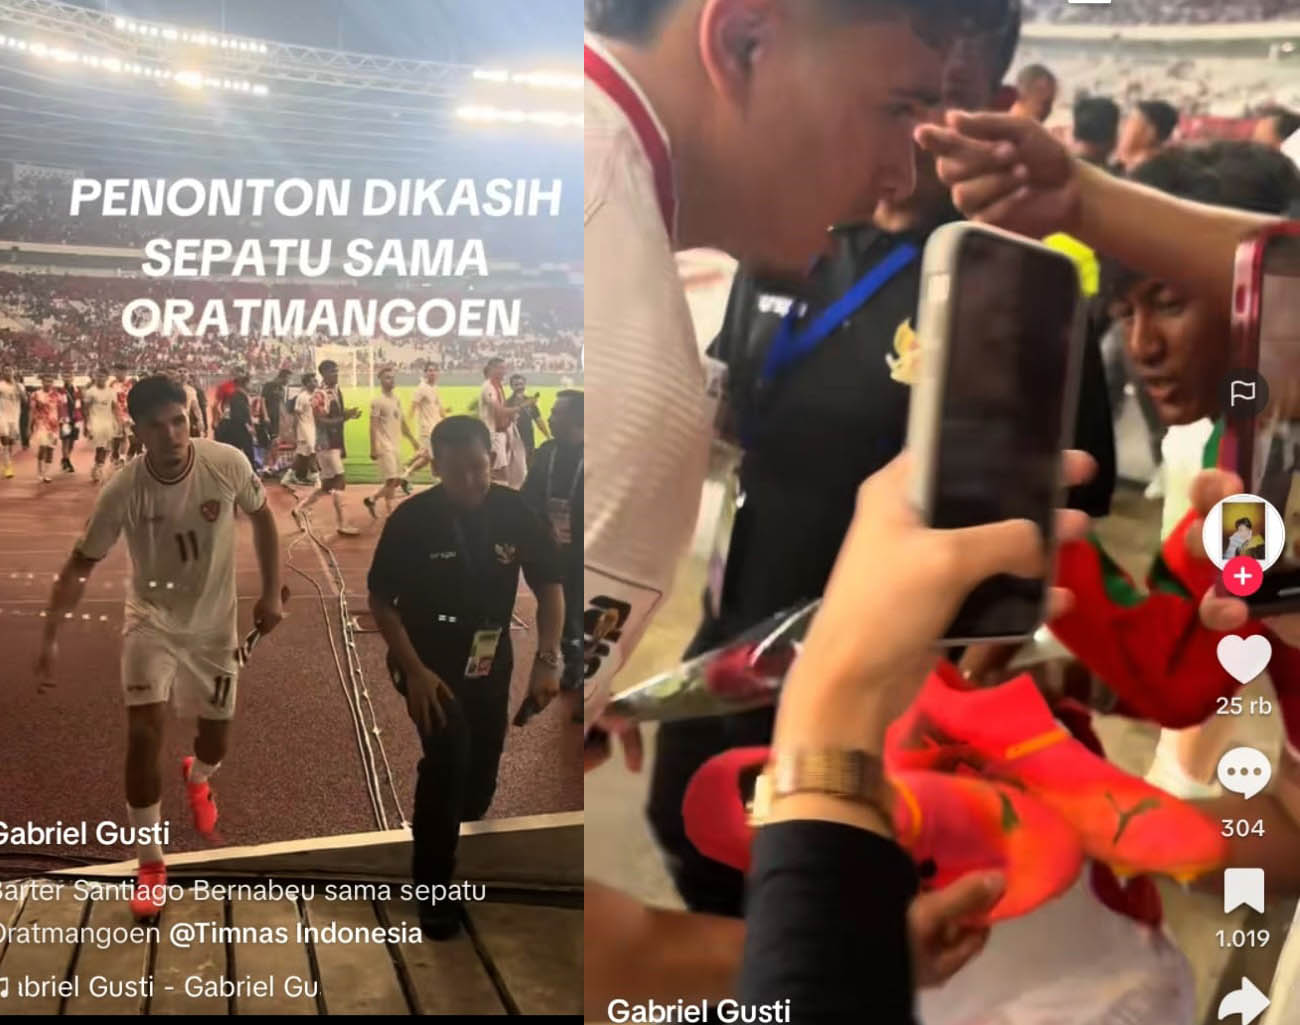 Ragnar Oratmangoen Gagal Penuhi Janji Cetak Gol, Beri Sepatu kepada Penggemar Sepak Bola, Ronde 3 Piala Dunia